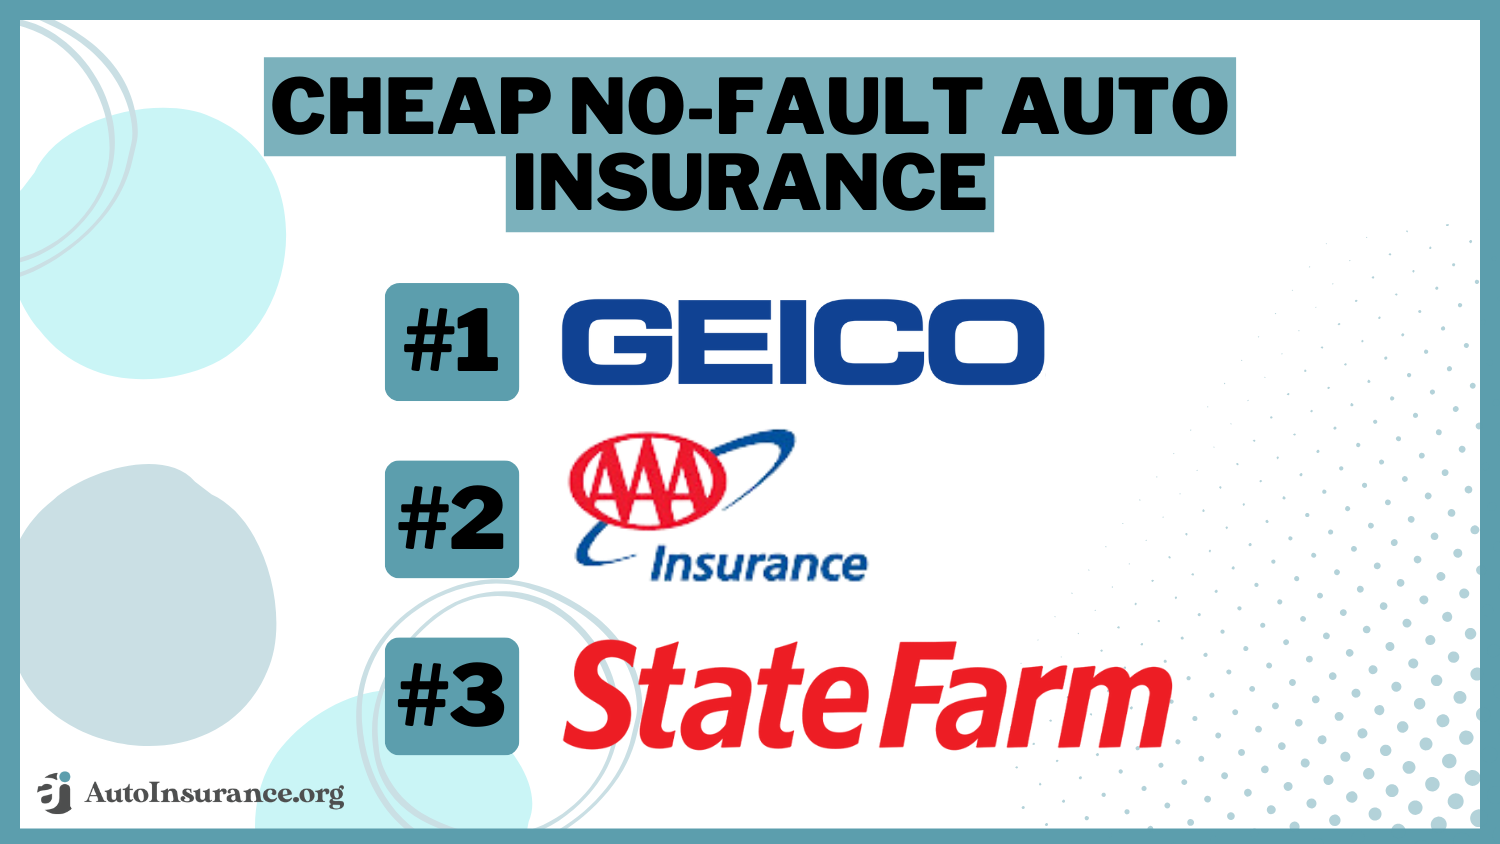 Geico, AAA, State Farm: Cheap No-Fault Auto Insurance